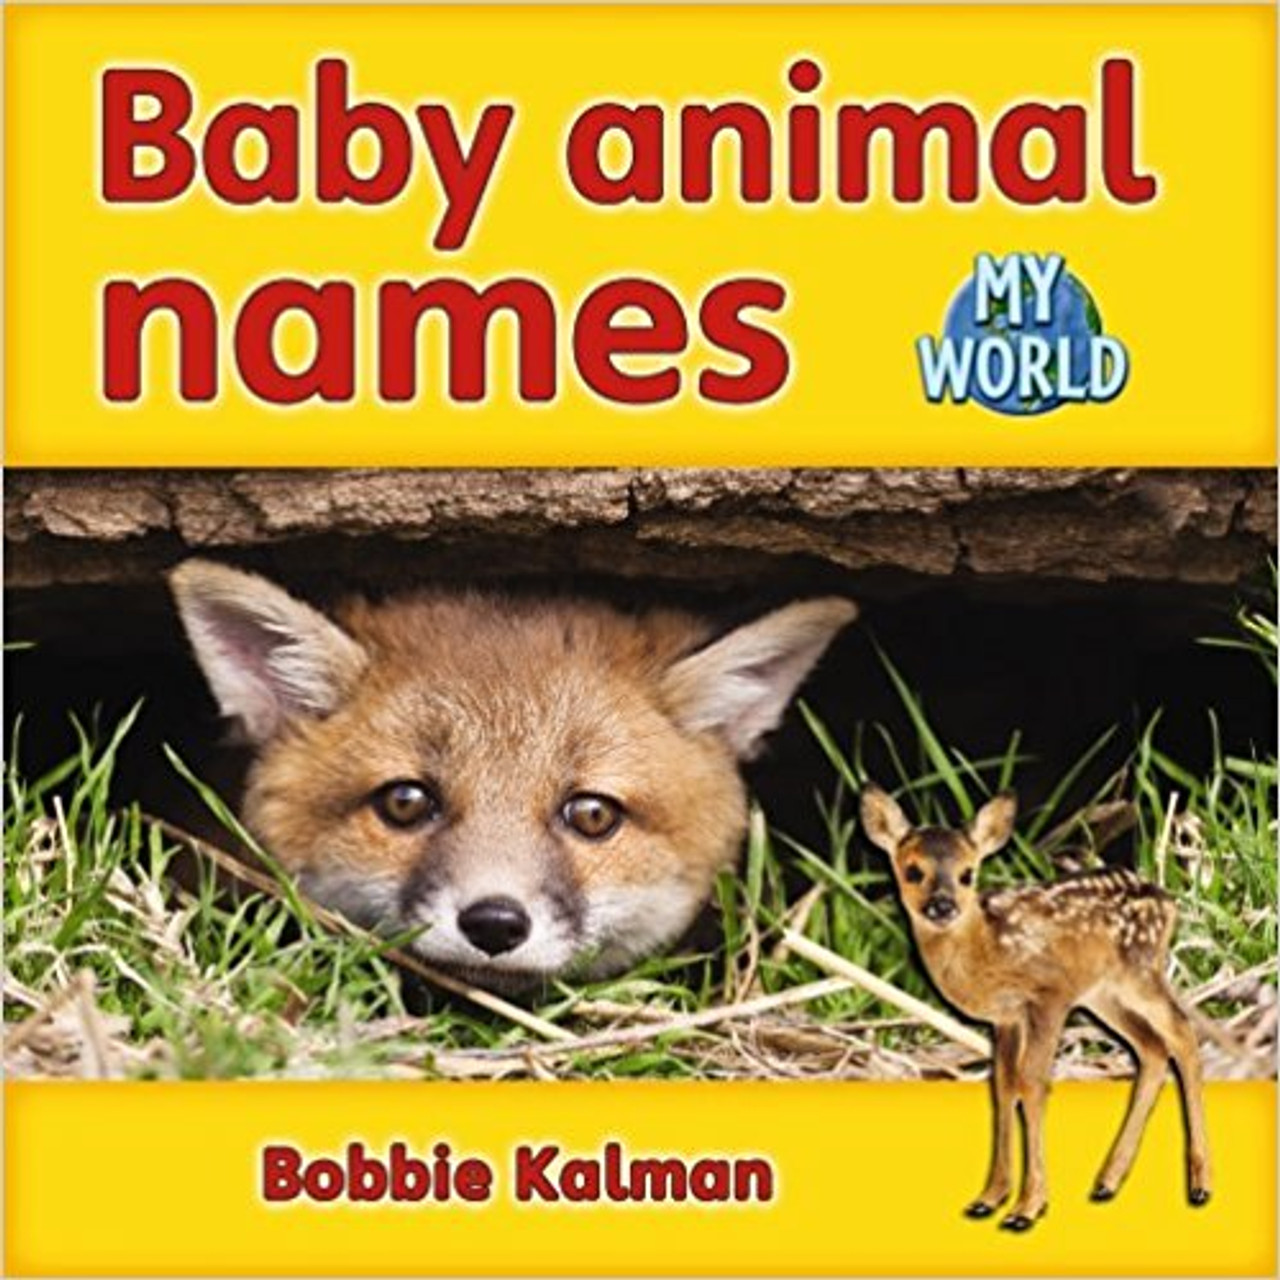 Baby Animal Names by Bobbie Kalman